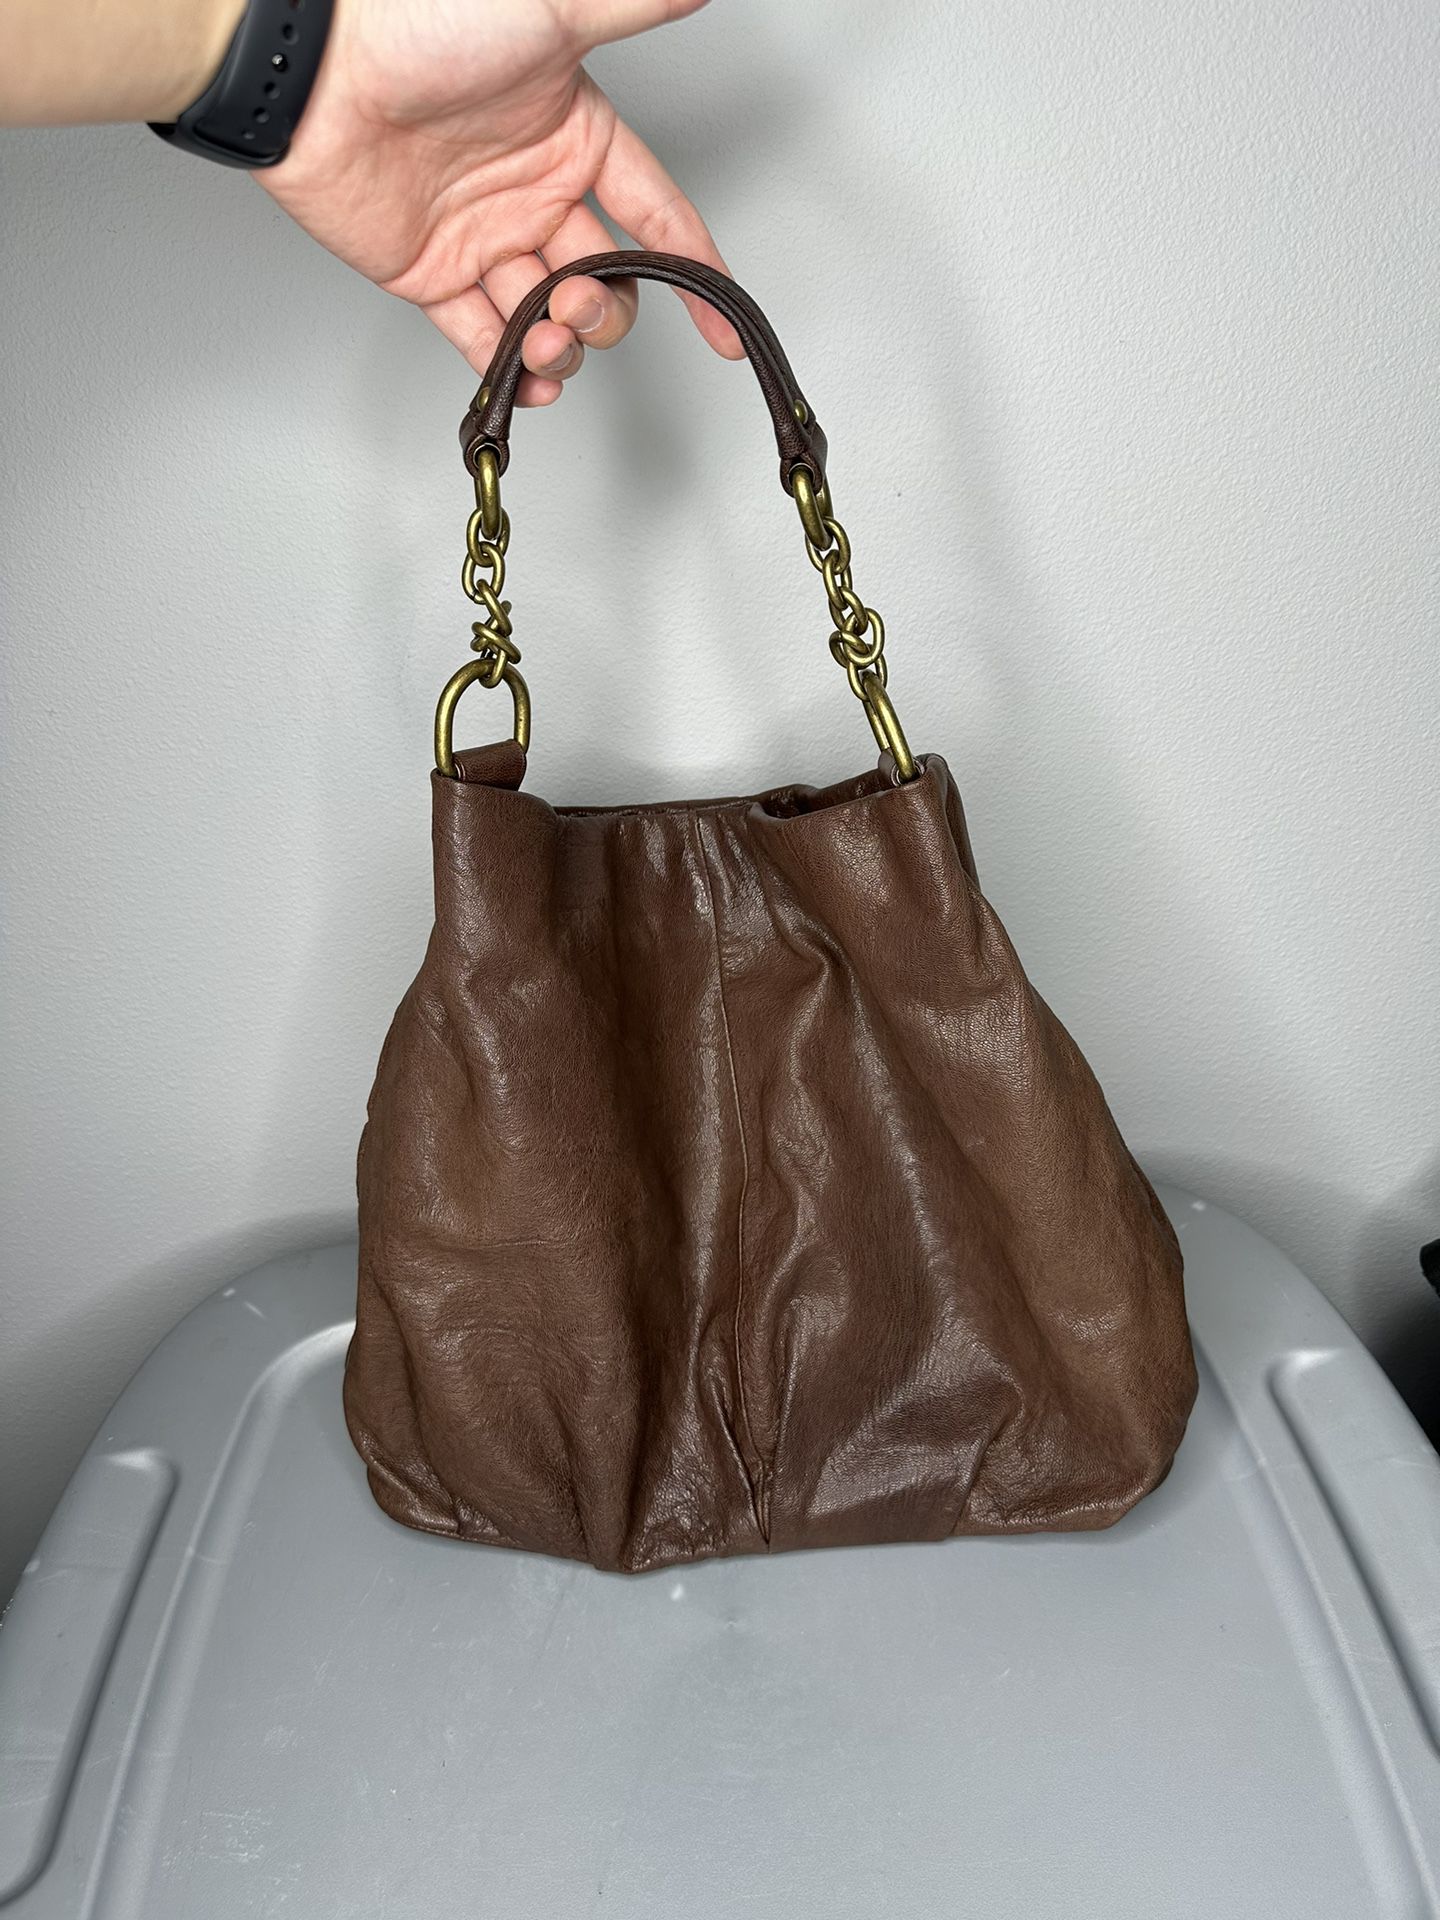 Nordstrom Brown Leather Hobo Bag